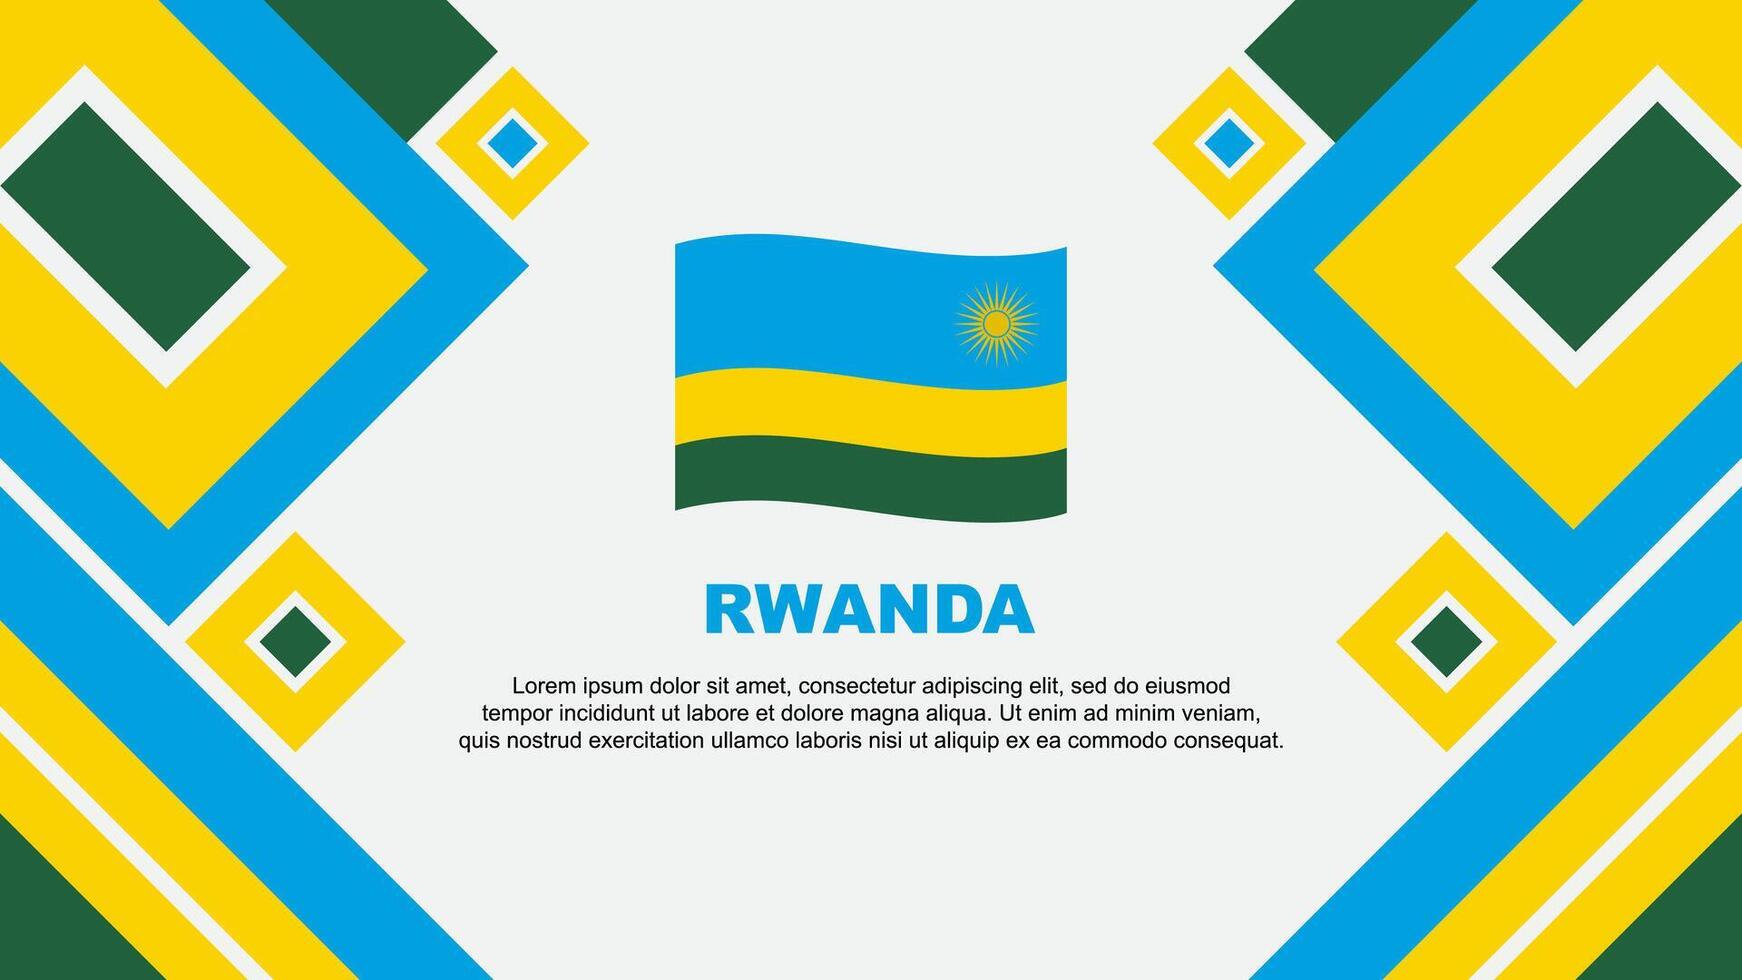 Rwanda Flag Abstract Background Design Template. Rwanda Independence Day Banner Wallpaper Vector Illustration. Rwanda Cartoon